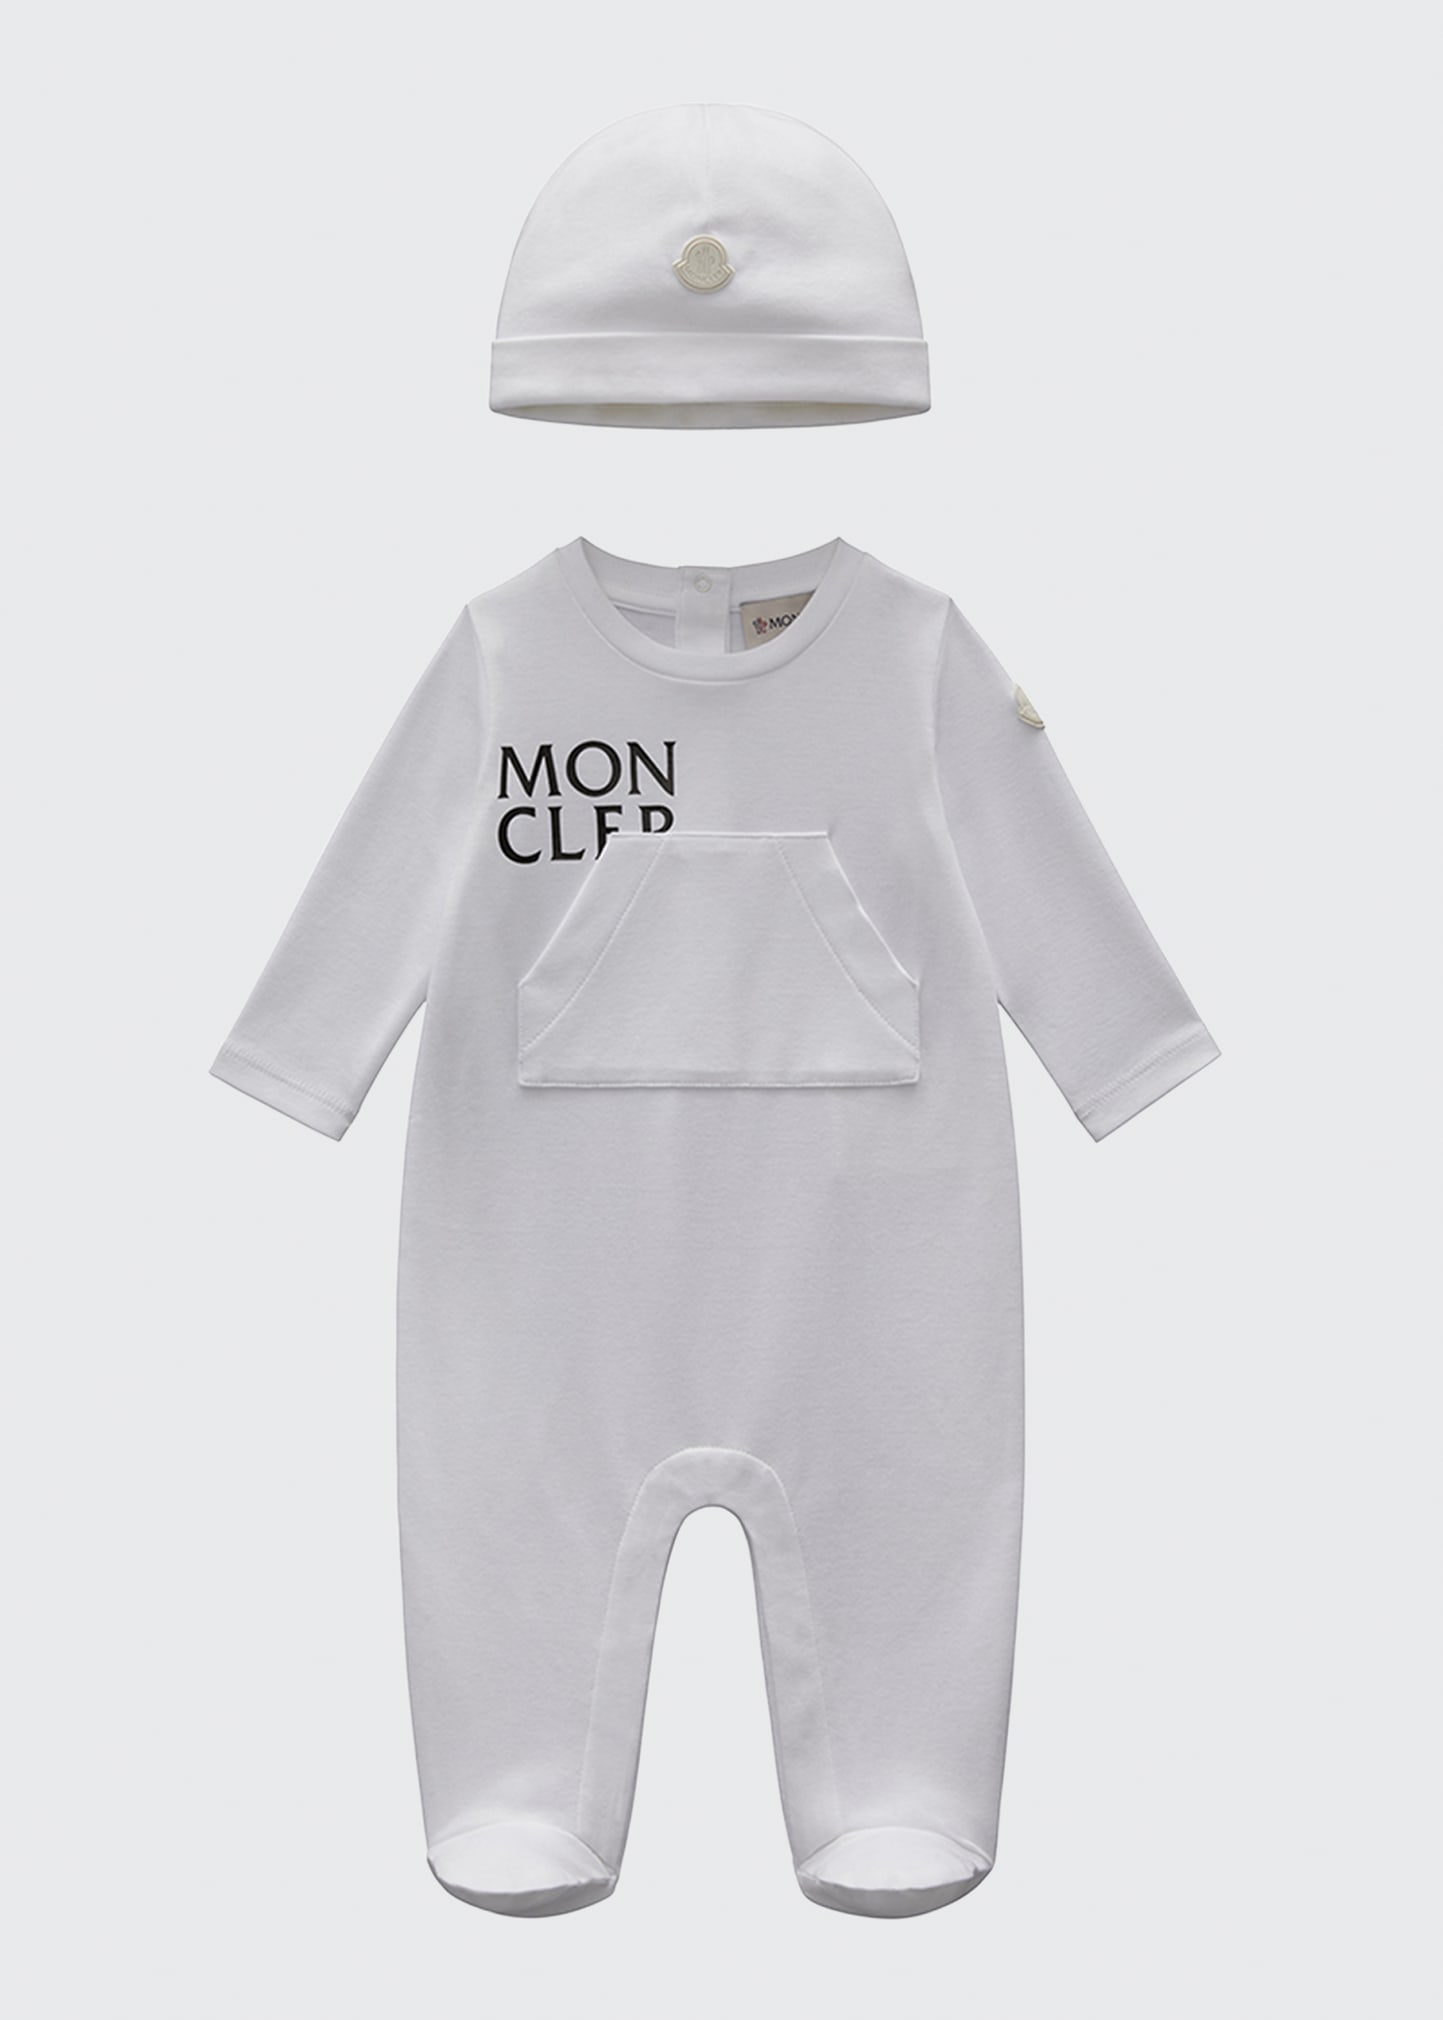 Moncler Boy's Love Logo Footie Pajamas w/ Hat, Size 1-12M 